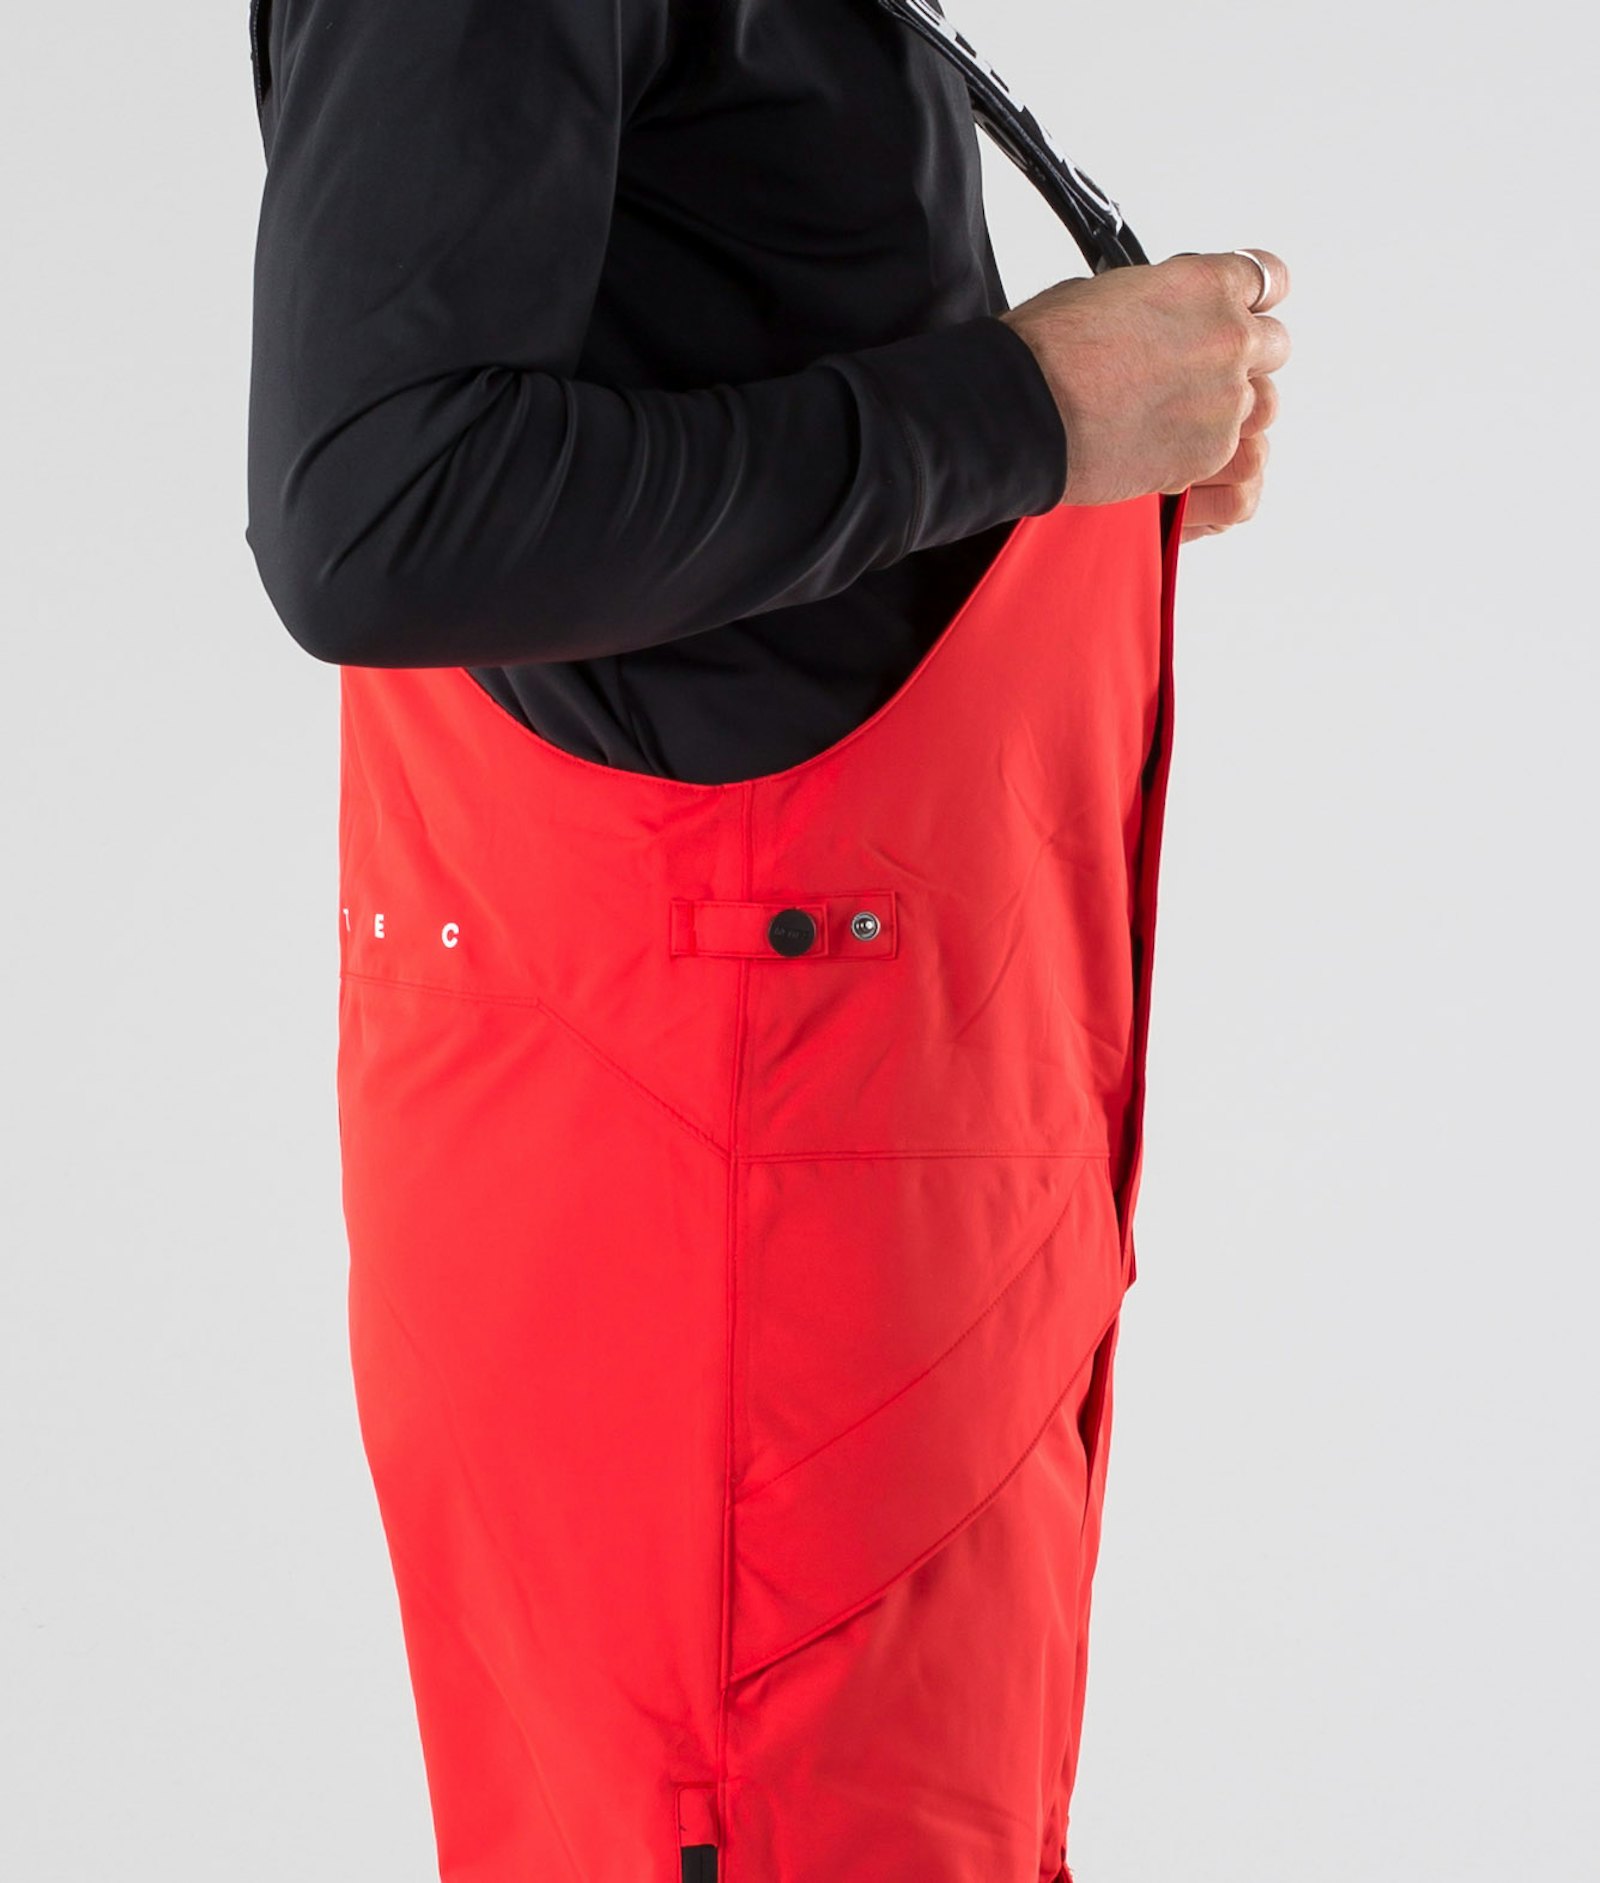 Fawk 2019 Snowboard Pants Men Red Renewed, Image 7 of 11